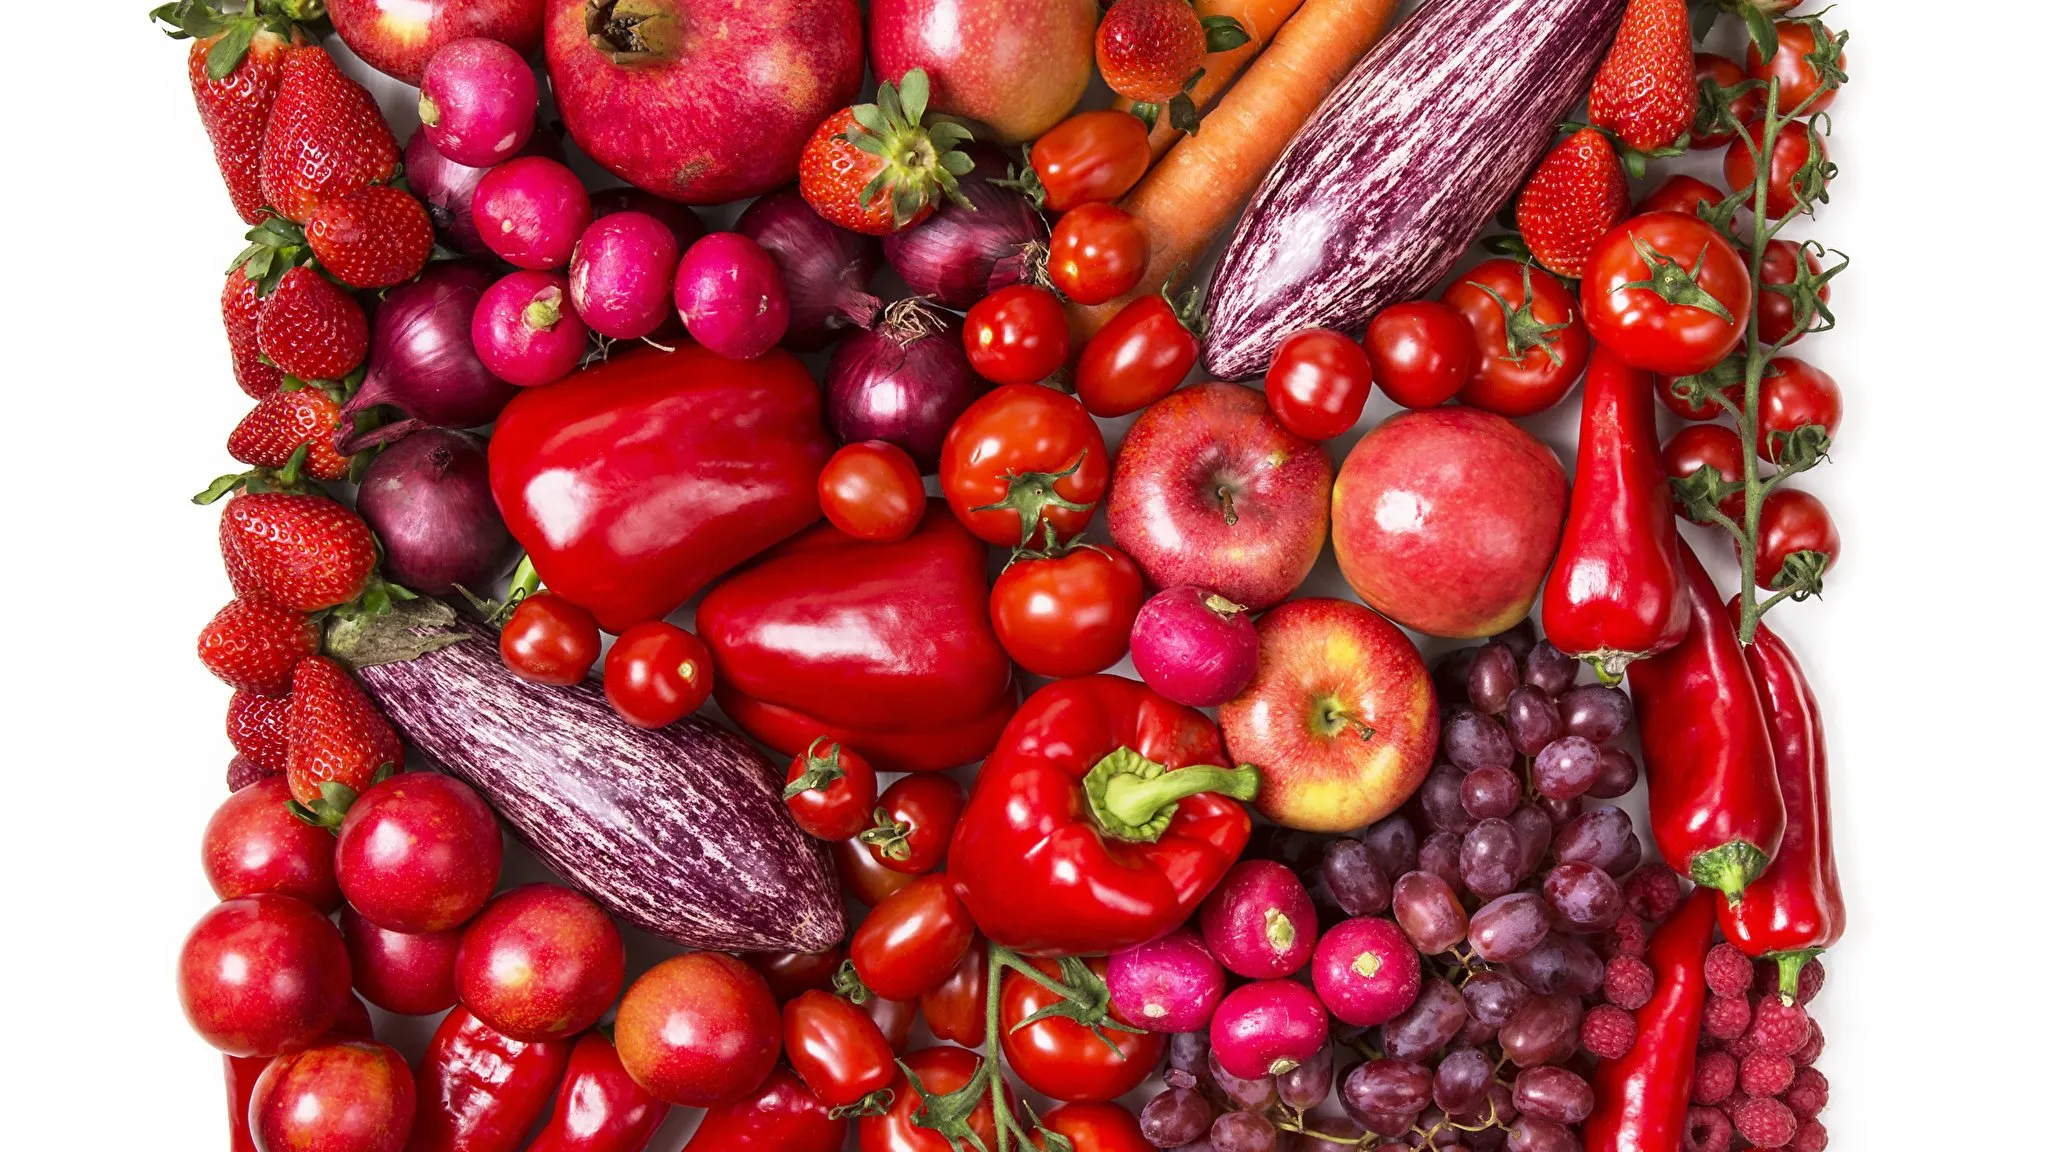 Red vegetable. Овощи и фрукты. Красные овощи и фрукты. Овощи, фрукты, ягоды. Овощи и фрукты красного цвета.